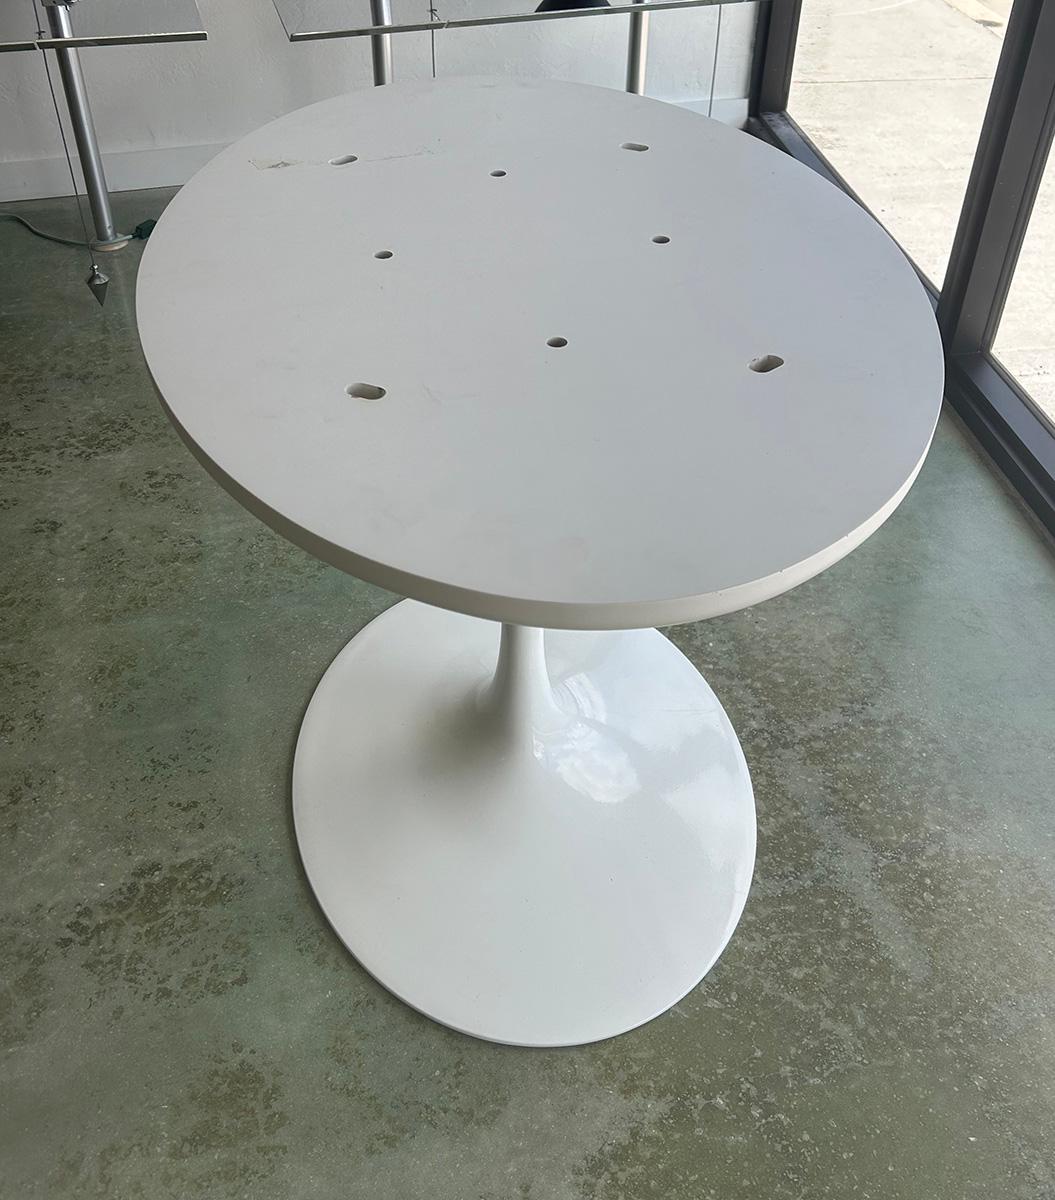 Knoll Saarinen Oval Carrara Marble Top Pedestal Dining Table 96